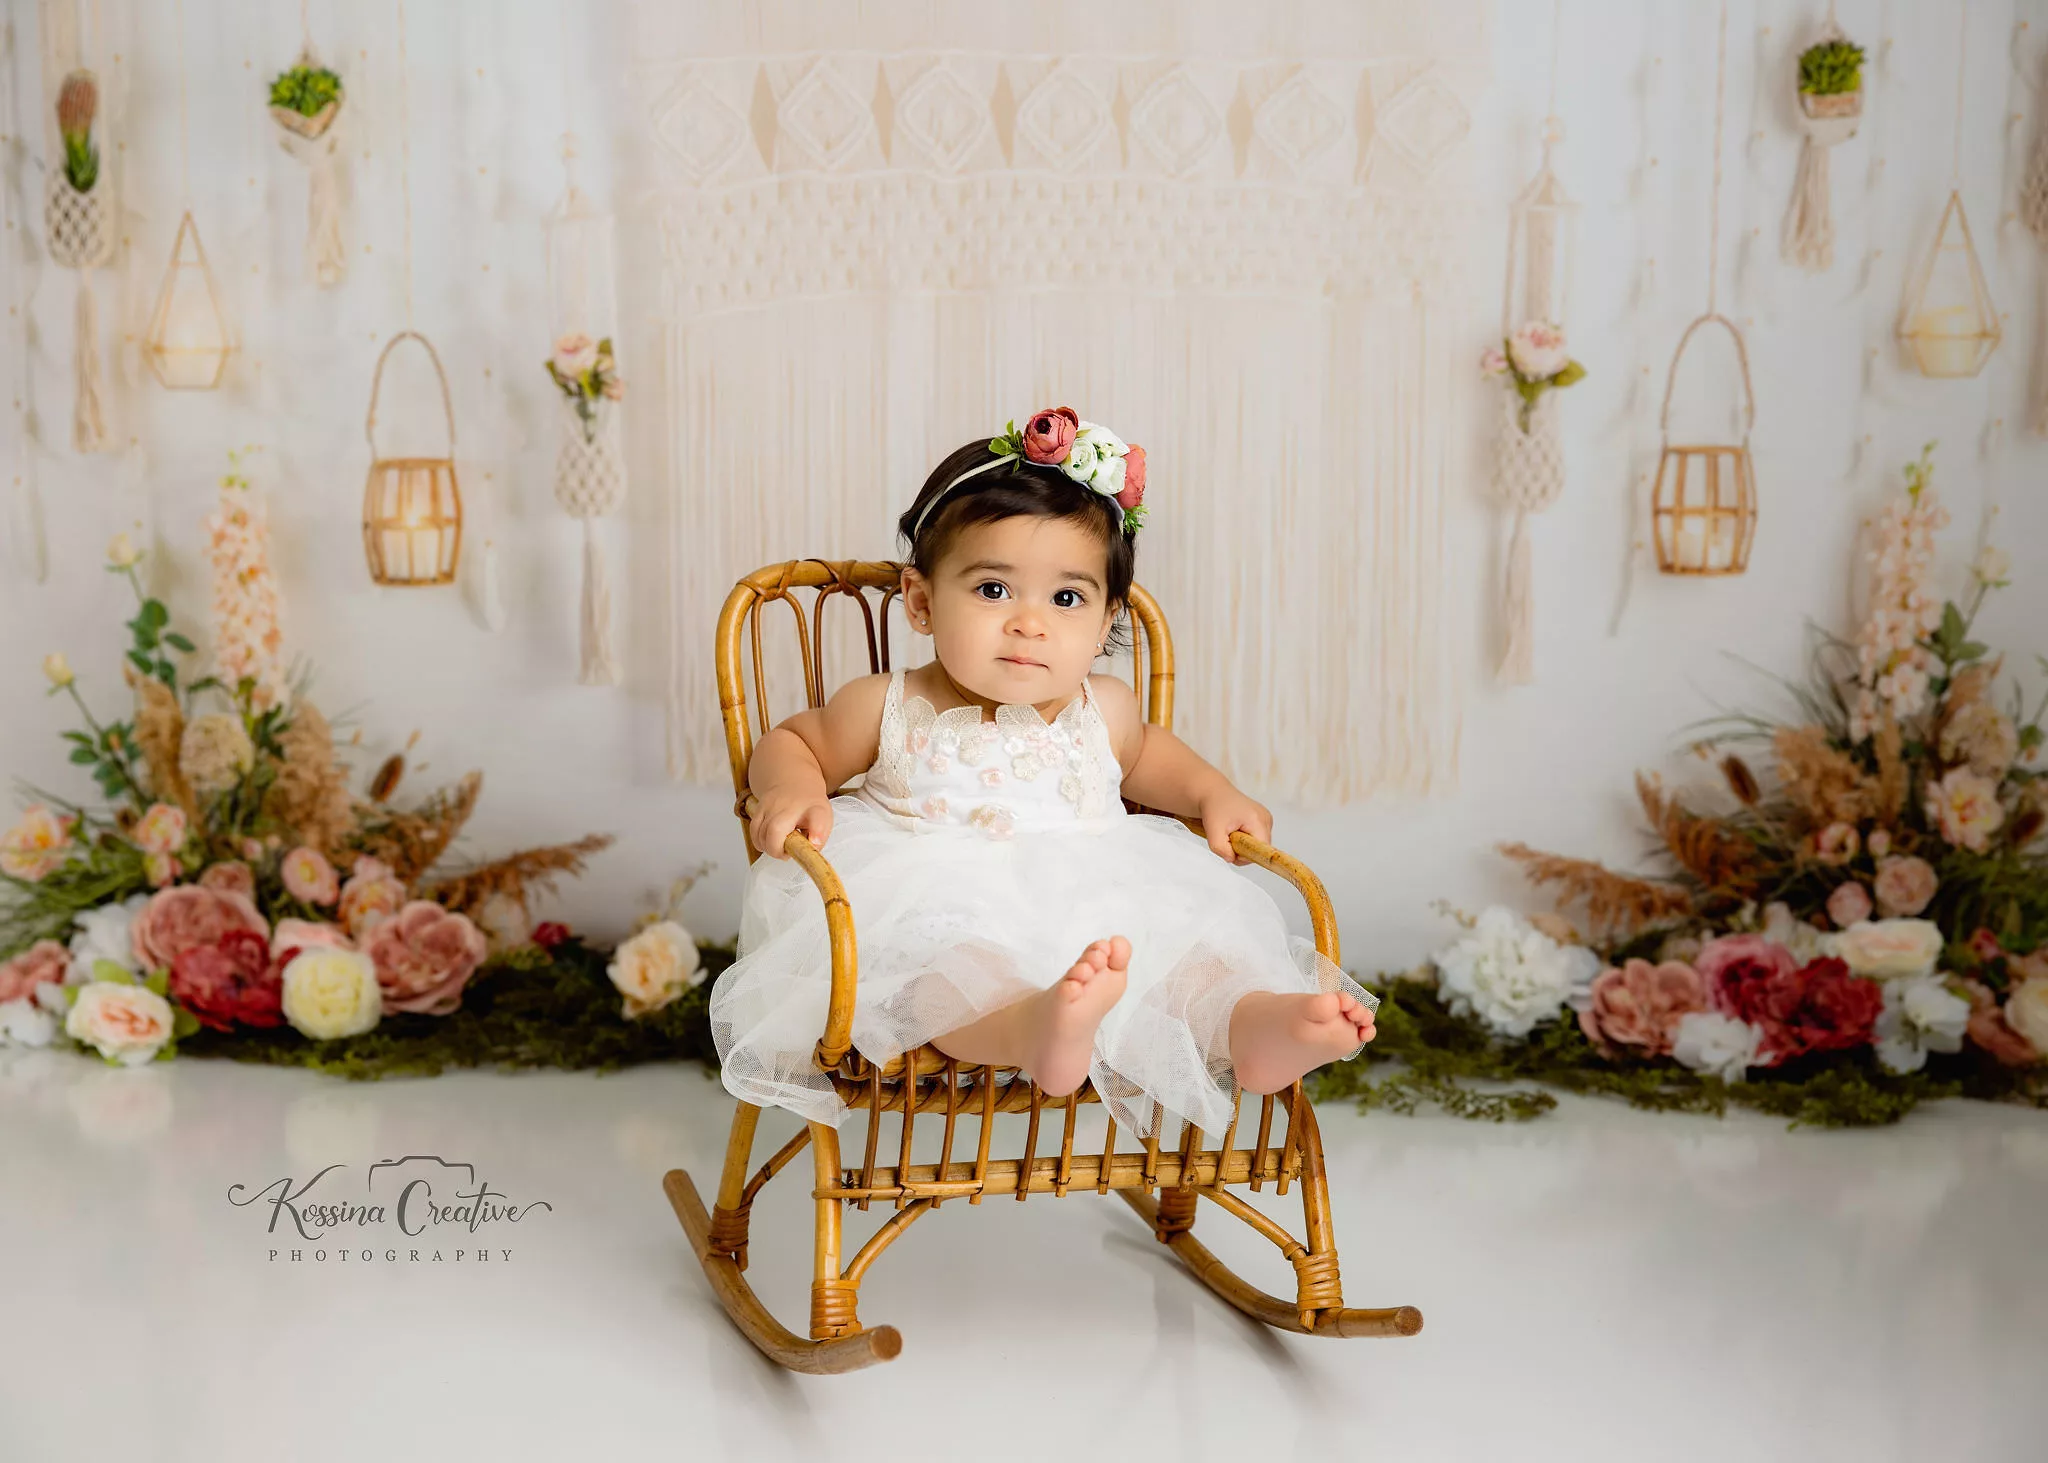 Orlando Girl Cake Smash 1st Birthday Photographer Photo Studio boho flowers wicker rocking chair white dress